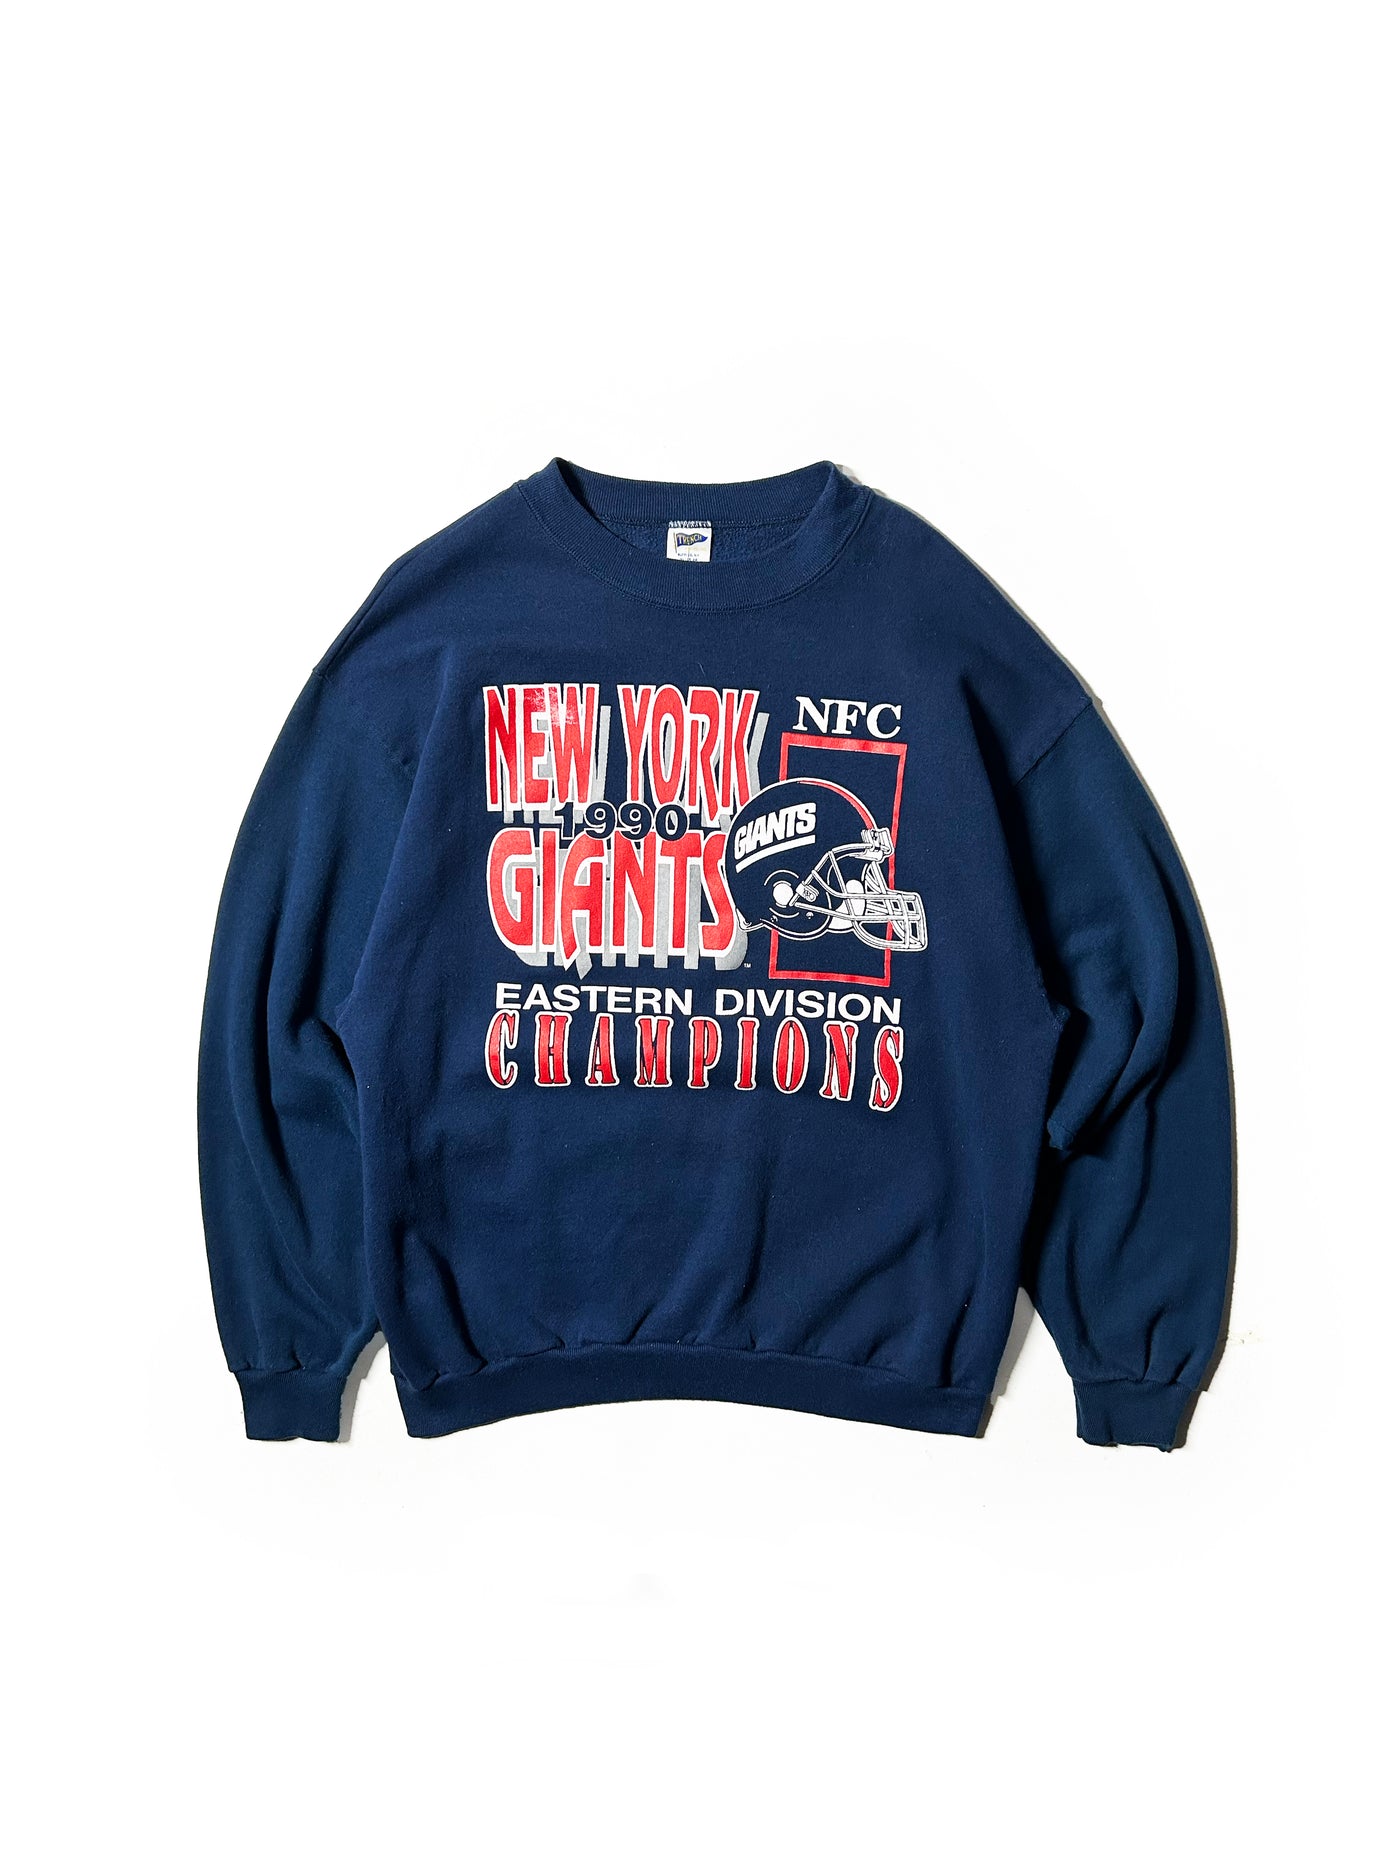 Vintage 1990 New York Giants Eastern Division Champs Crewneck